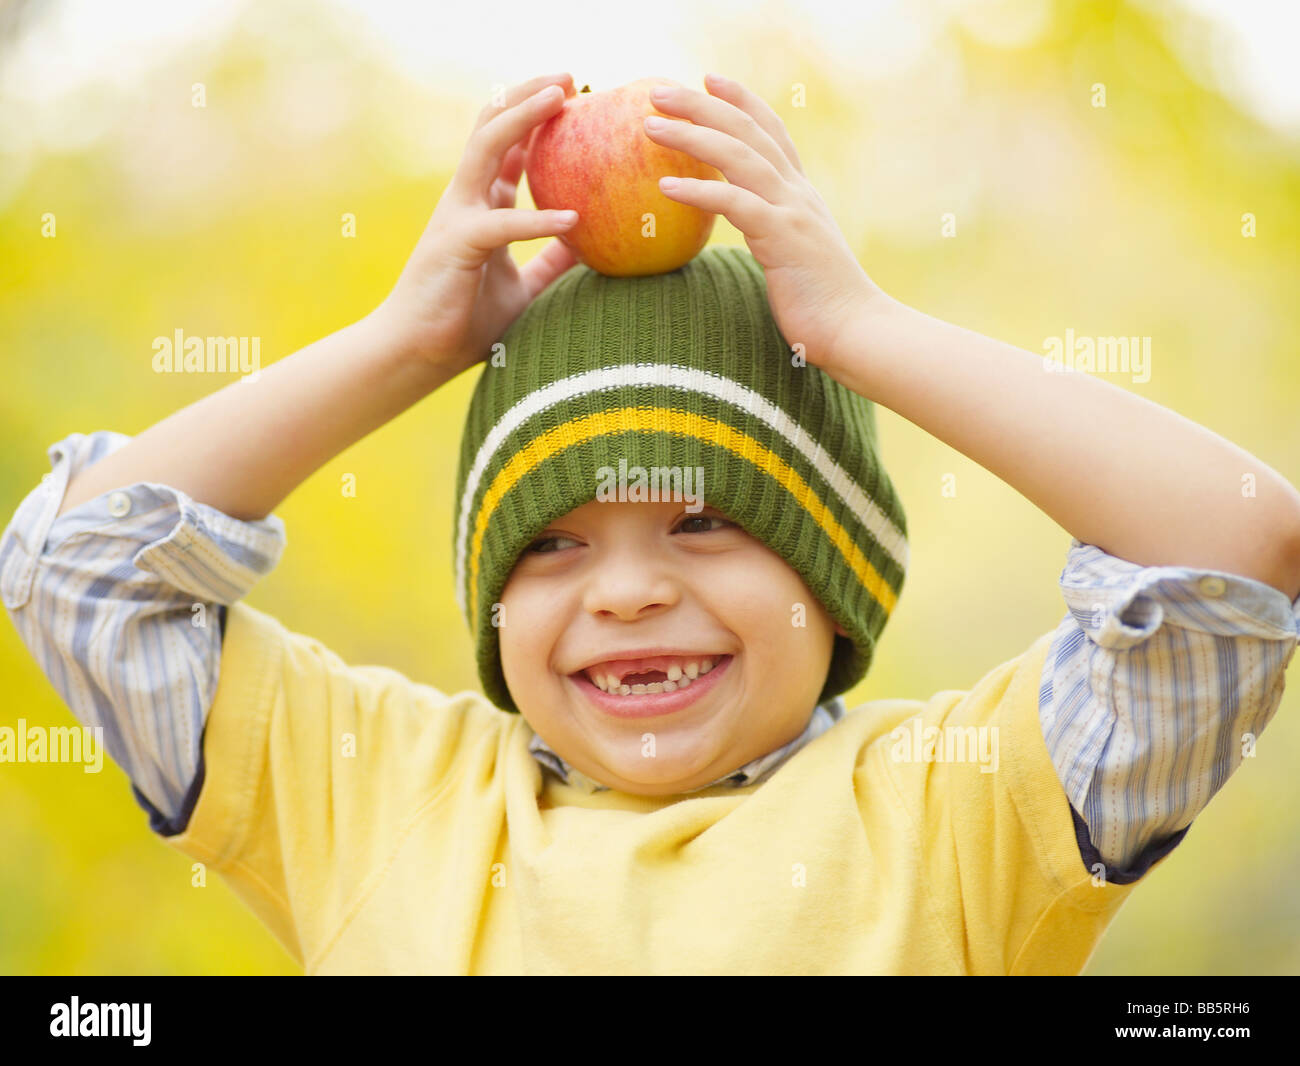 Toothless Hispanic boy balancing apple on head Stock Photo